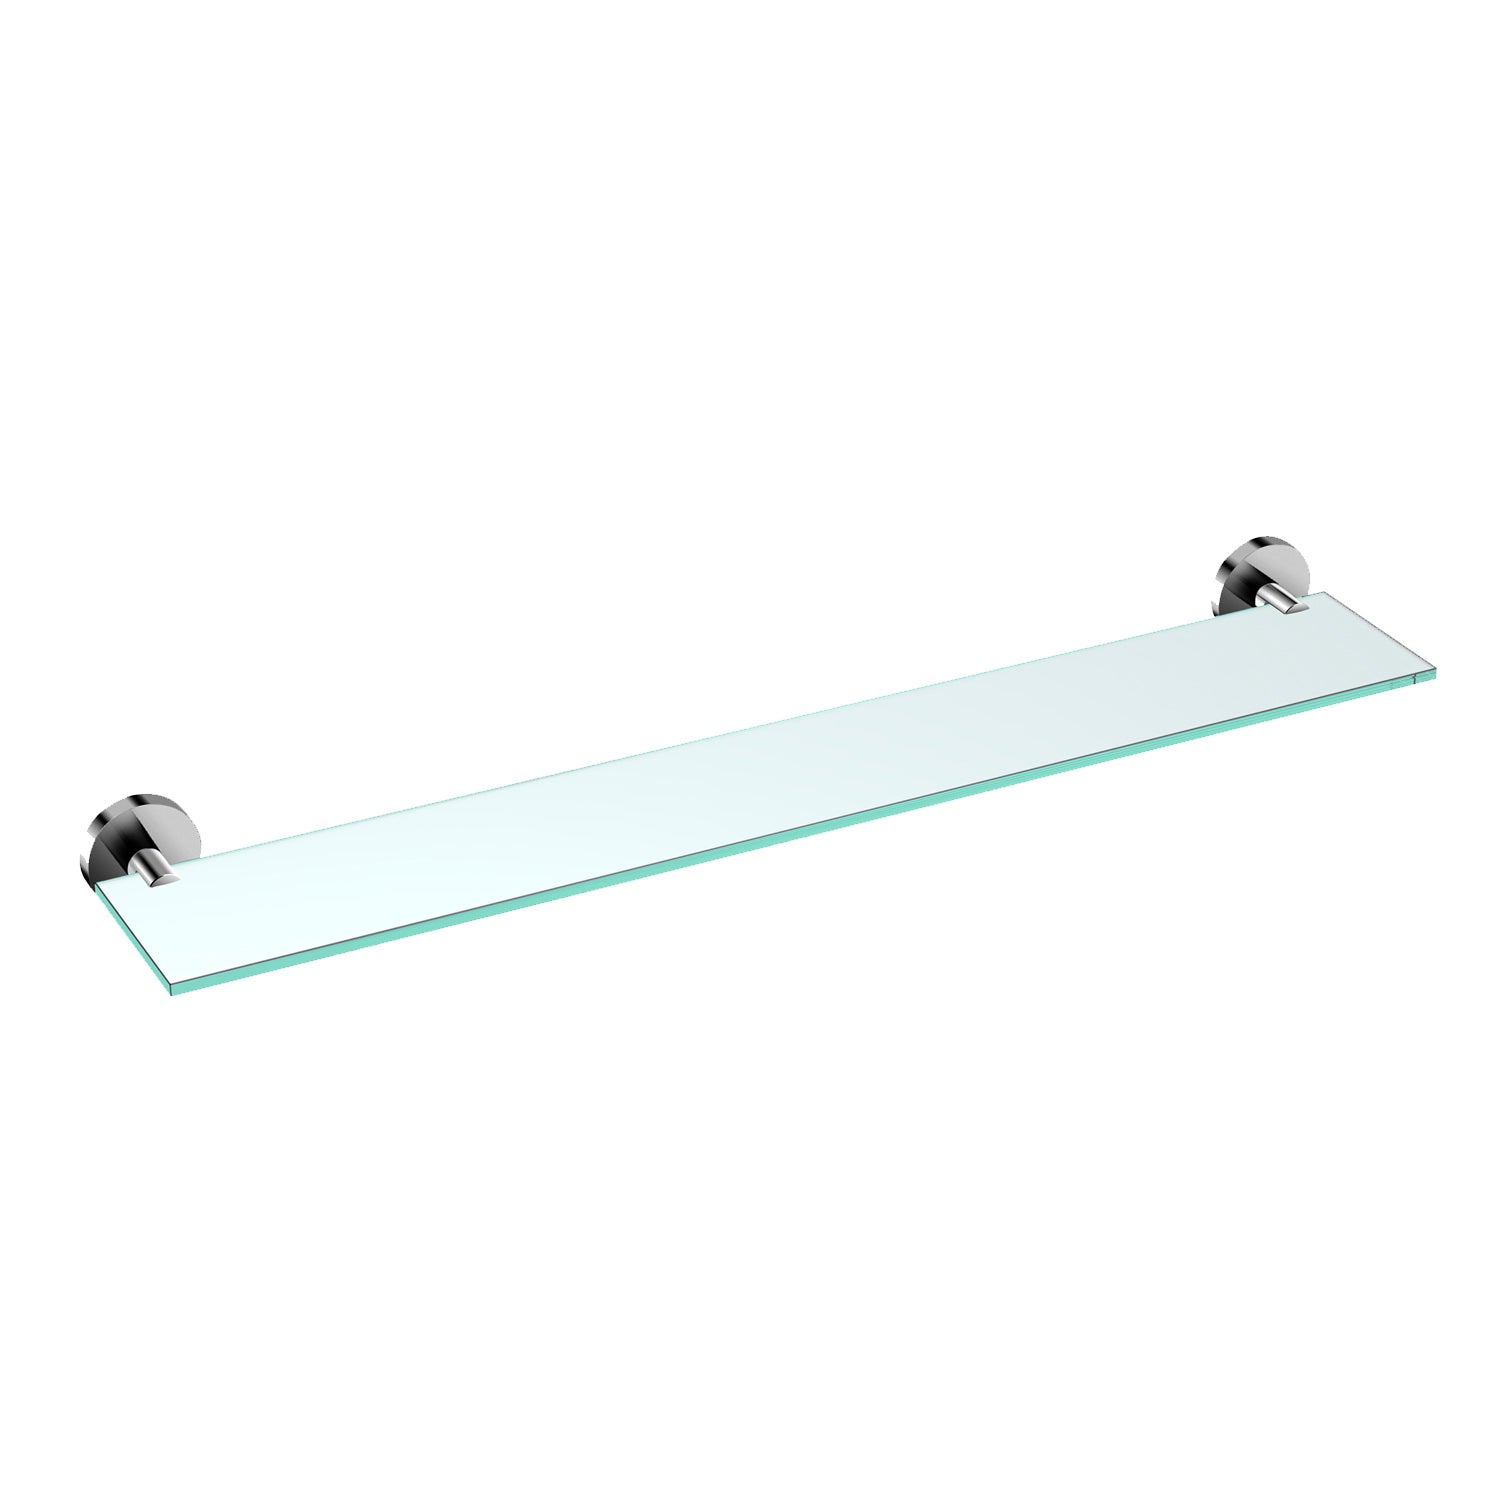 DAX Valencia Bathroom Shelf, Wall Mount, Brass Body with Tempered Glass, Chrome Finish, 24-3/16 Inches (DAX-GDC120145-CR)